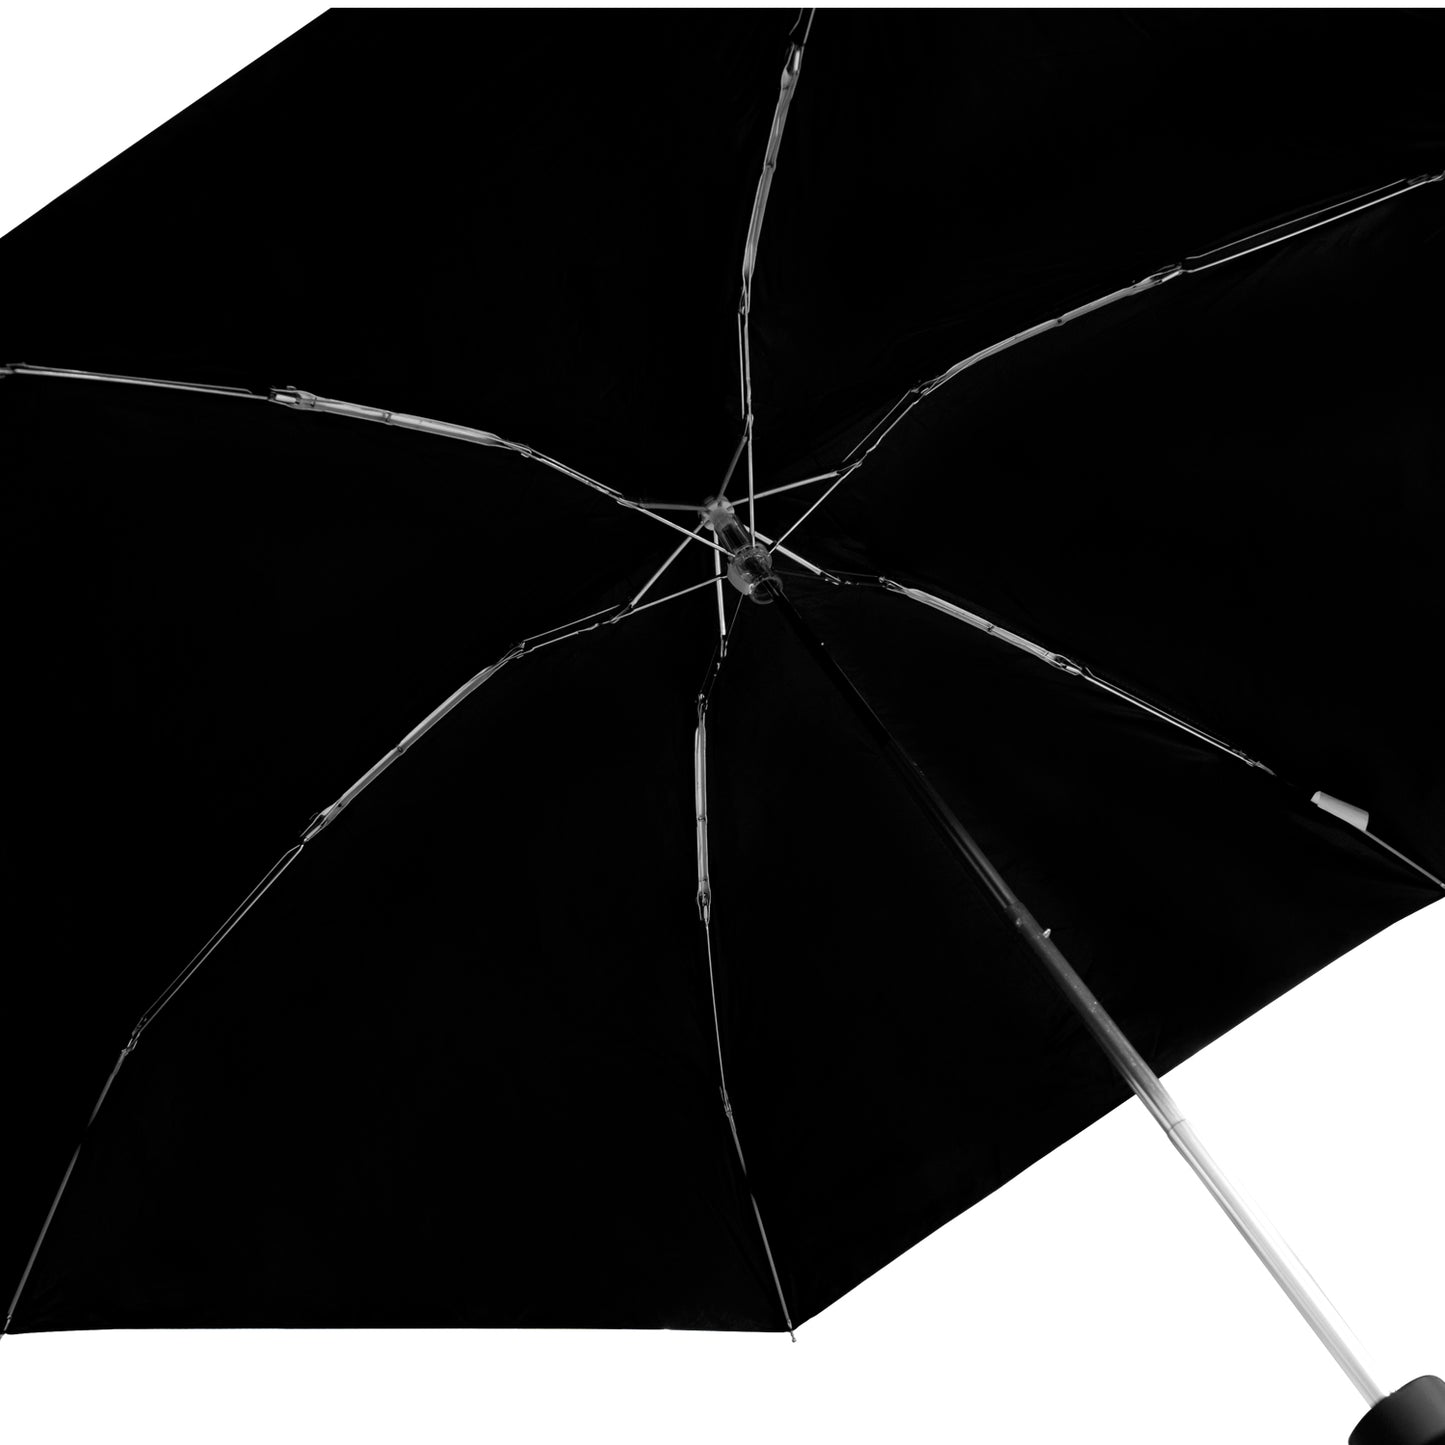 Paraguas De Bolsillo Con Estuche Ideal Para Viajes